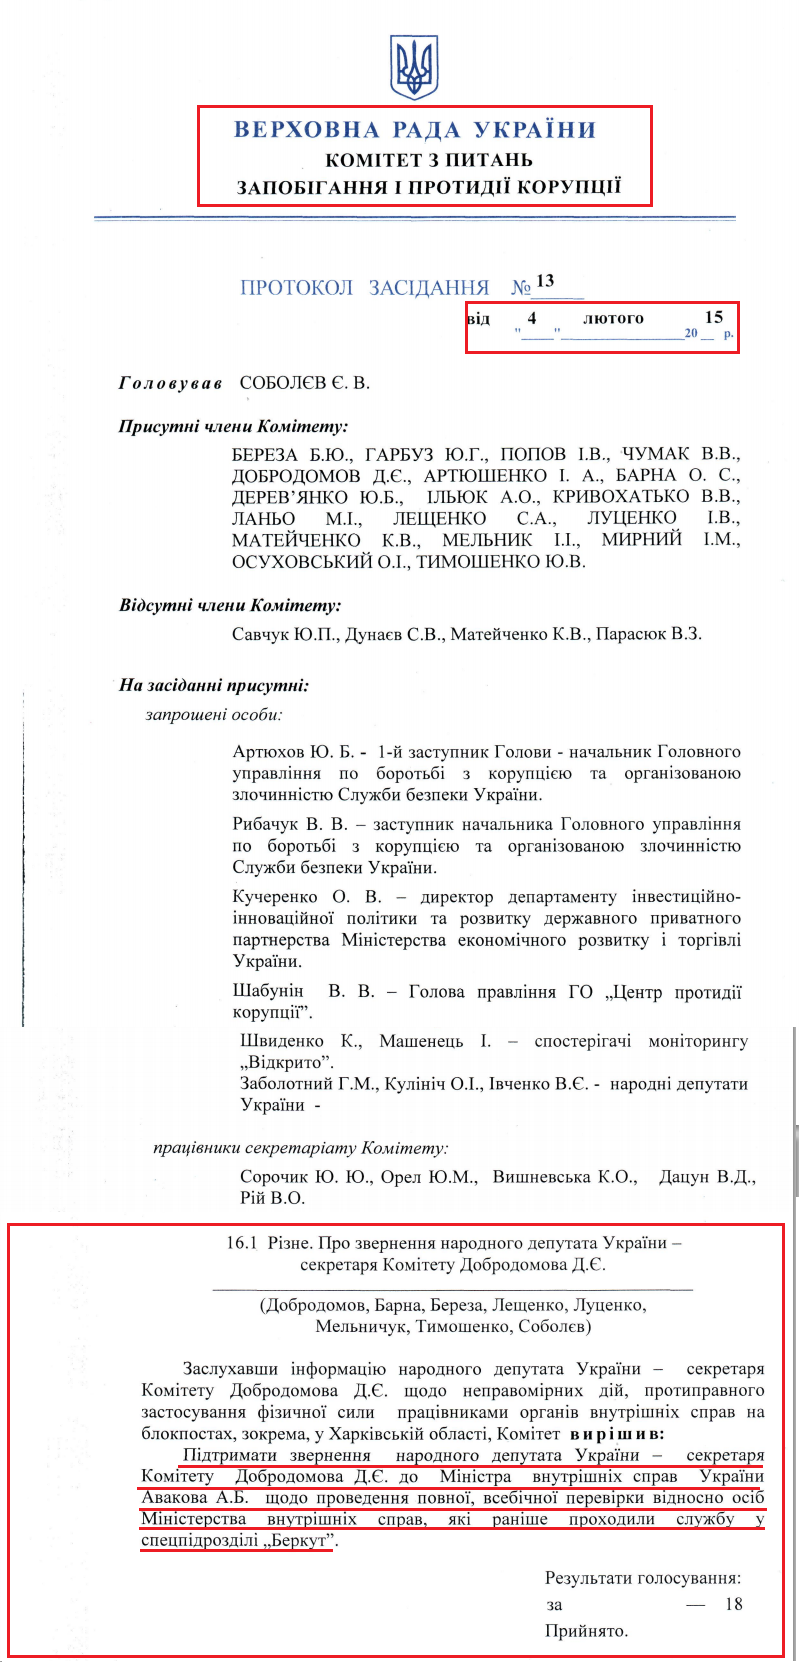 http://crimecor.rada.gov.ua/komzloch/doccatalog/document?id=54981